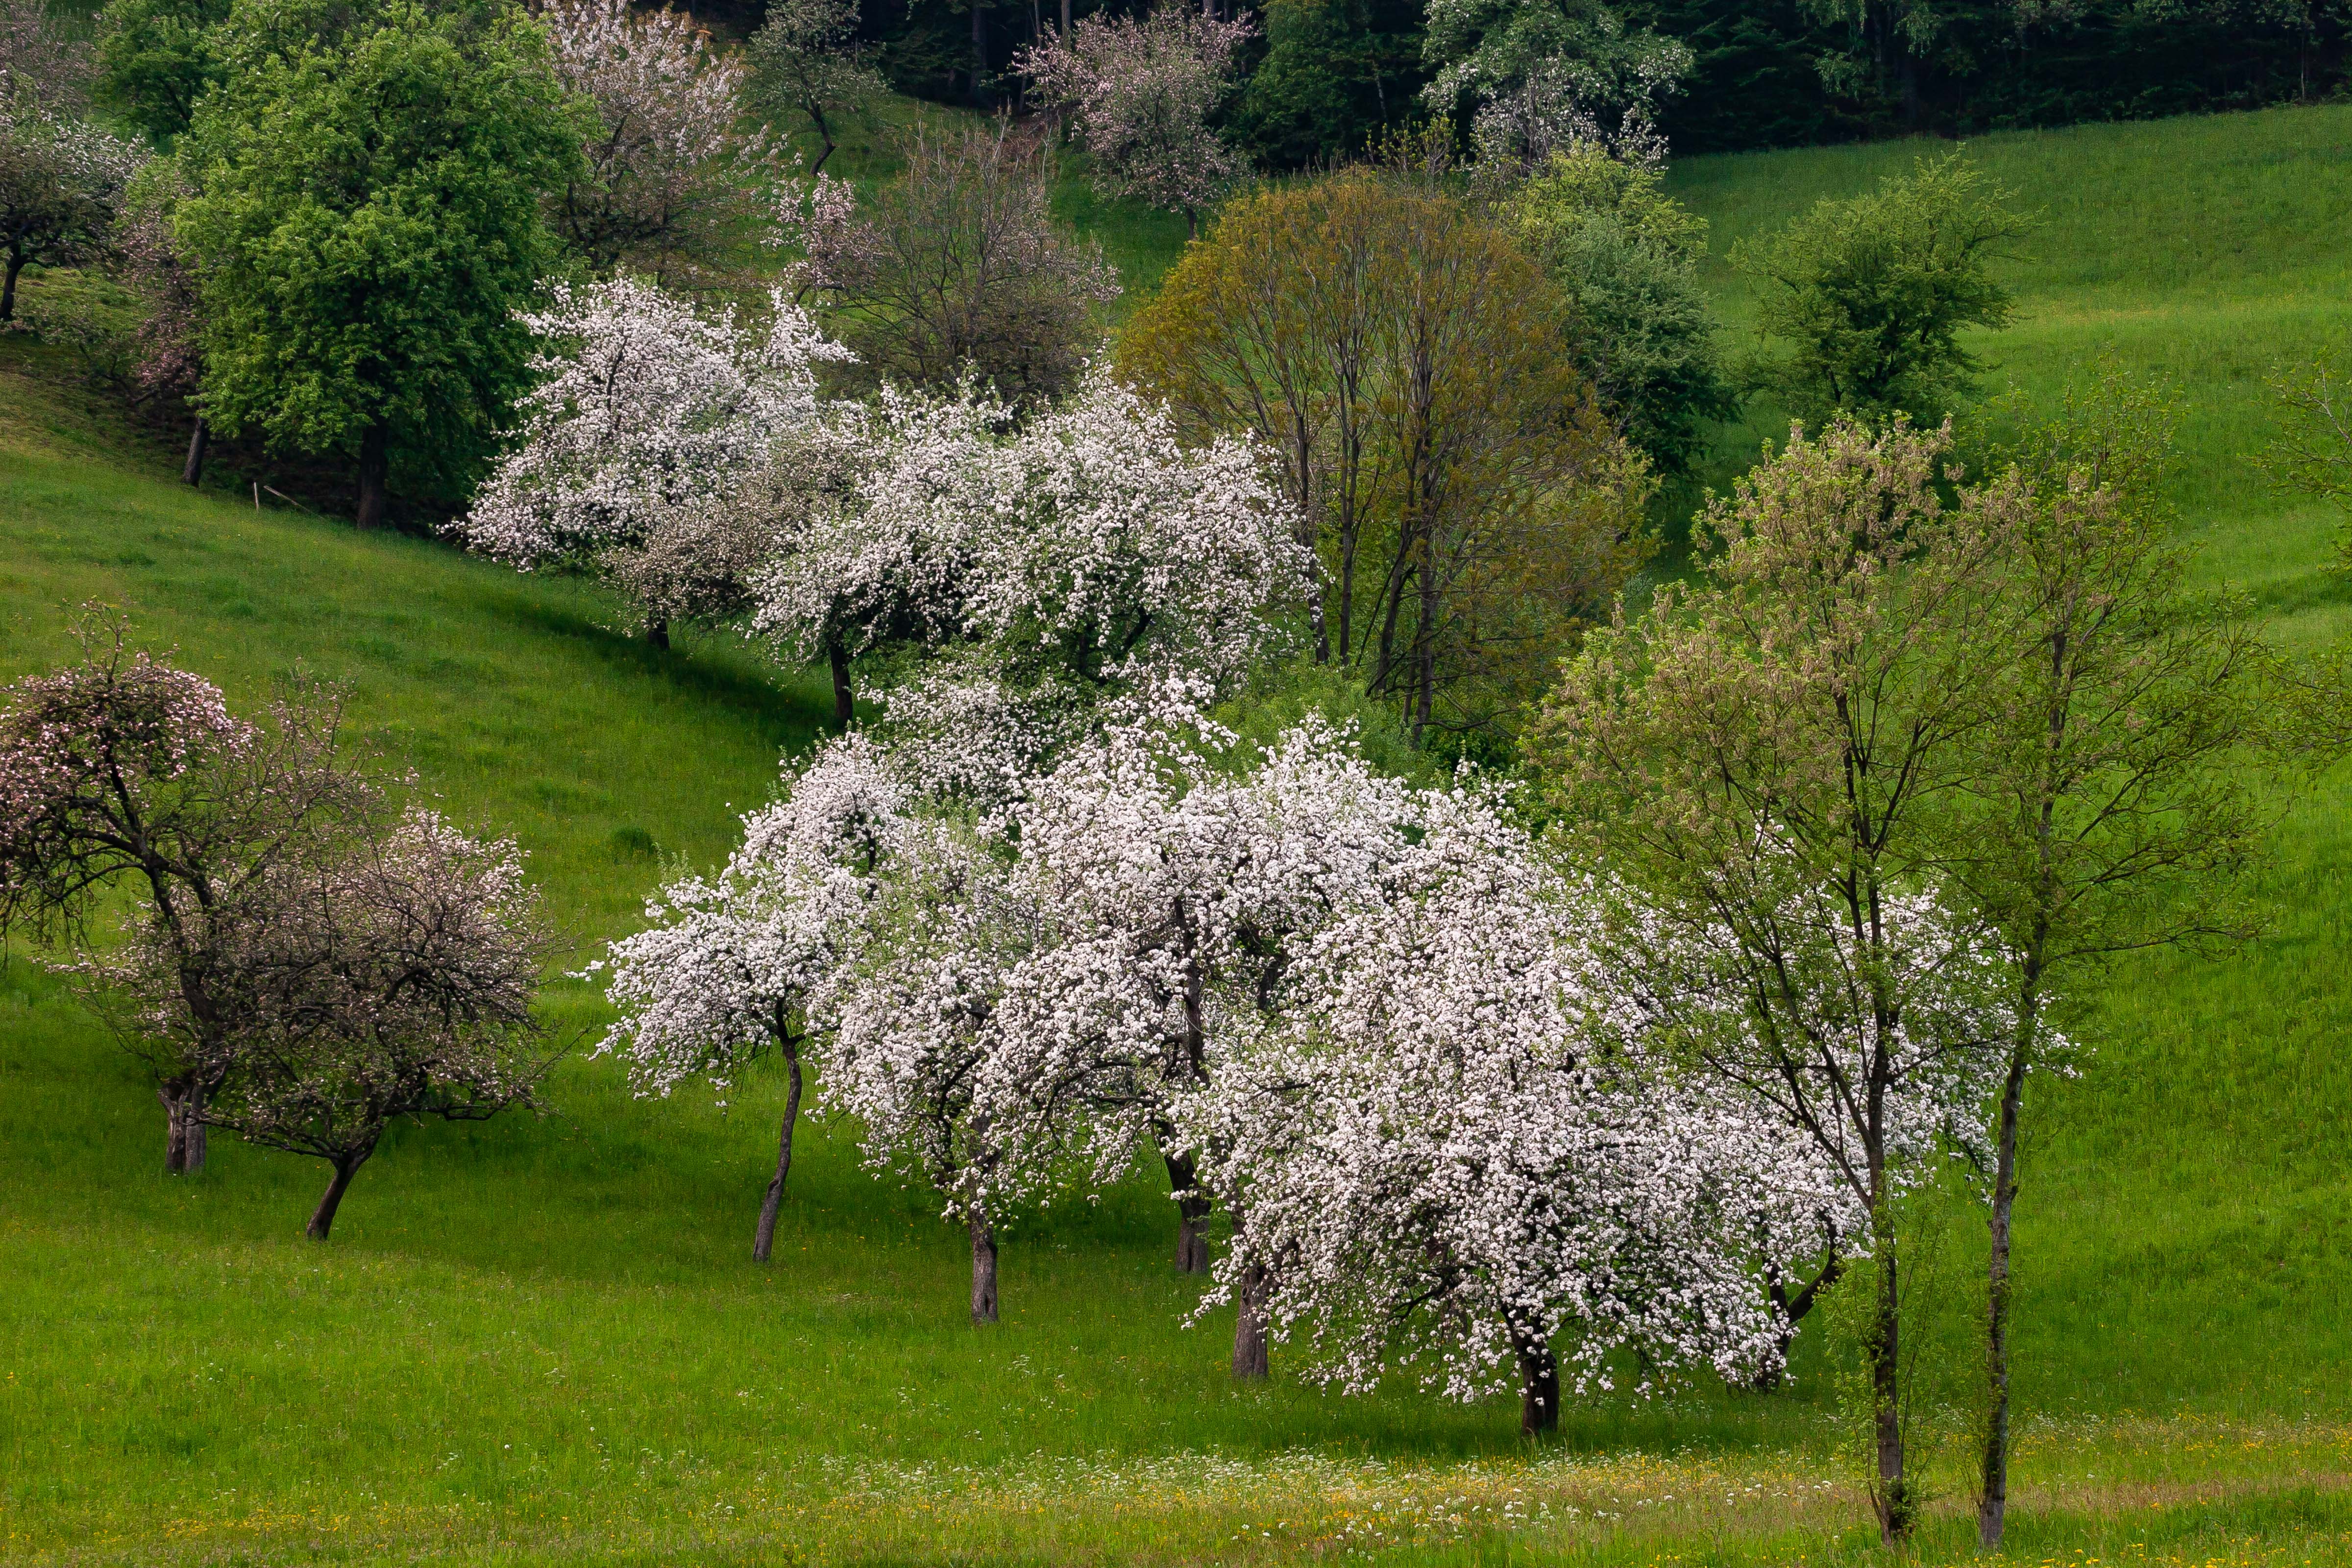 Slovenia, Vitanje Prov, Blossoming Trees, 2006, IMG 5677